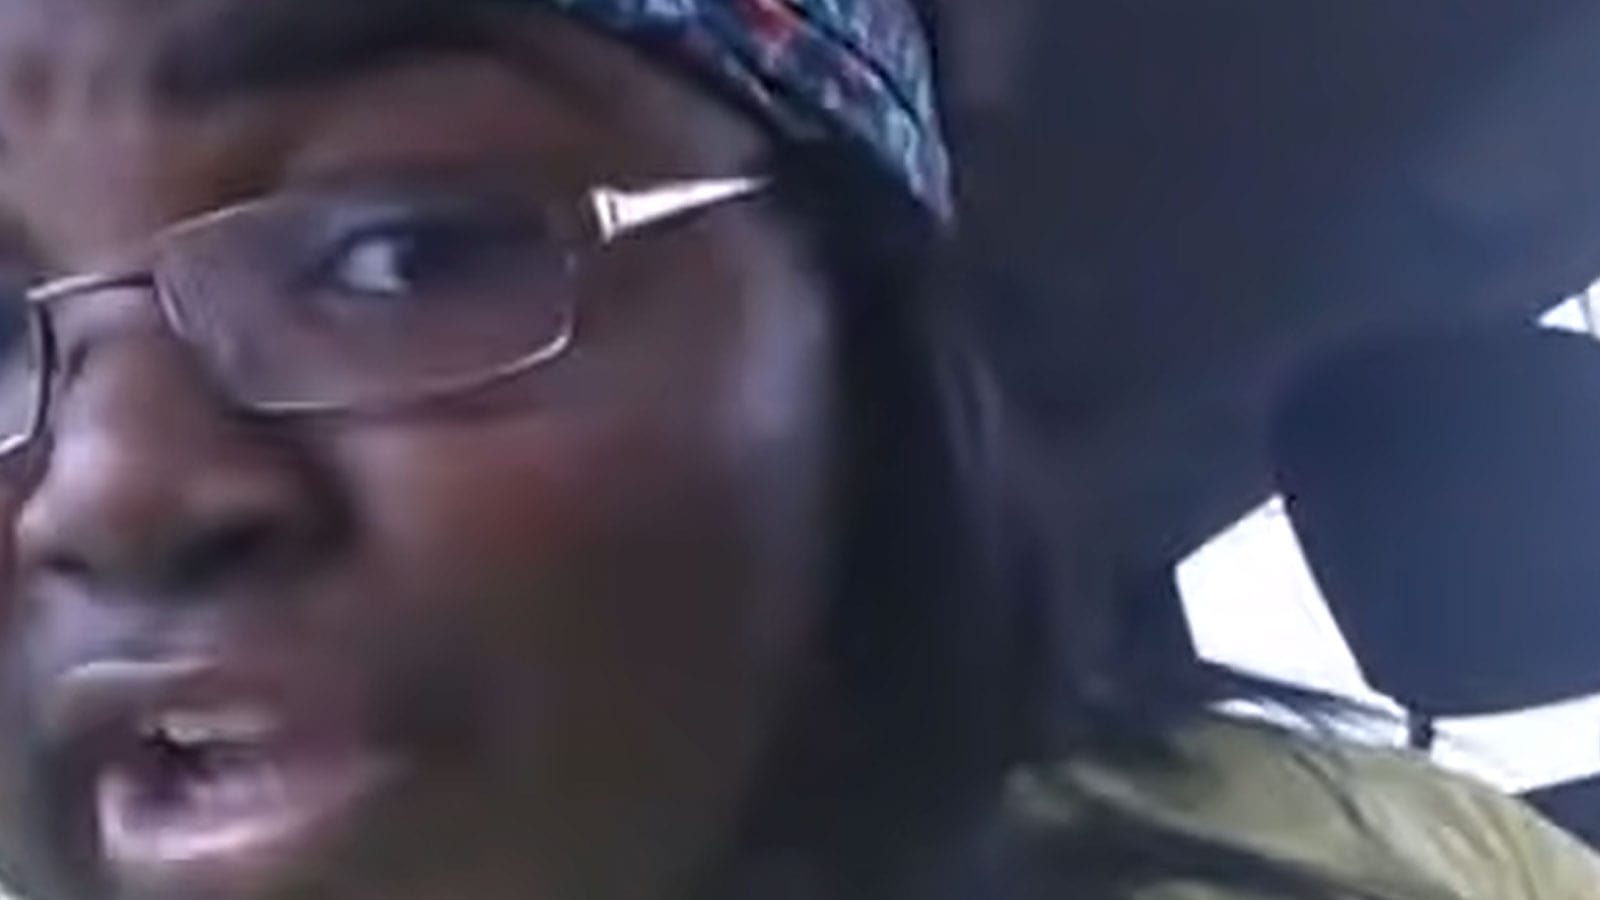 Kayla Newman's original "on fleek" selfie video, taken inside a car; she wears glasses and a printed headband